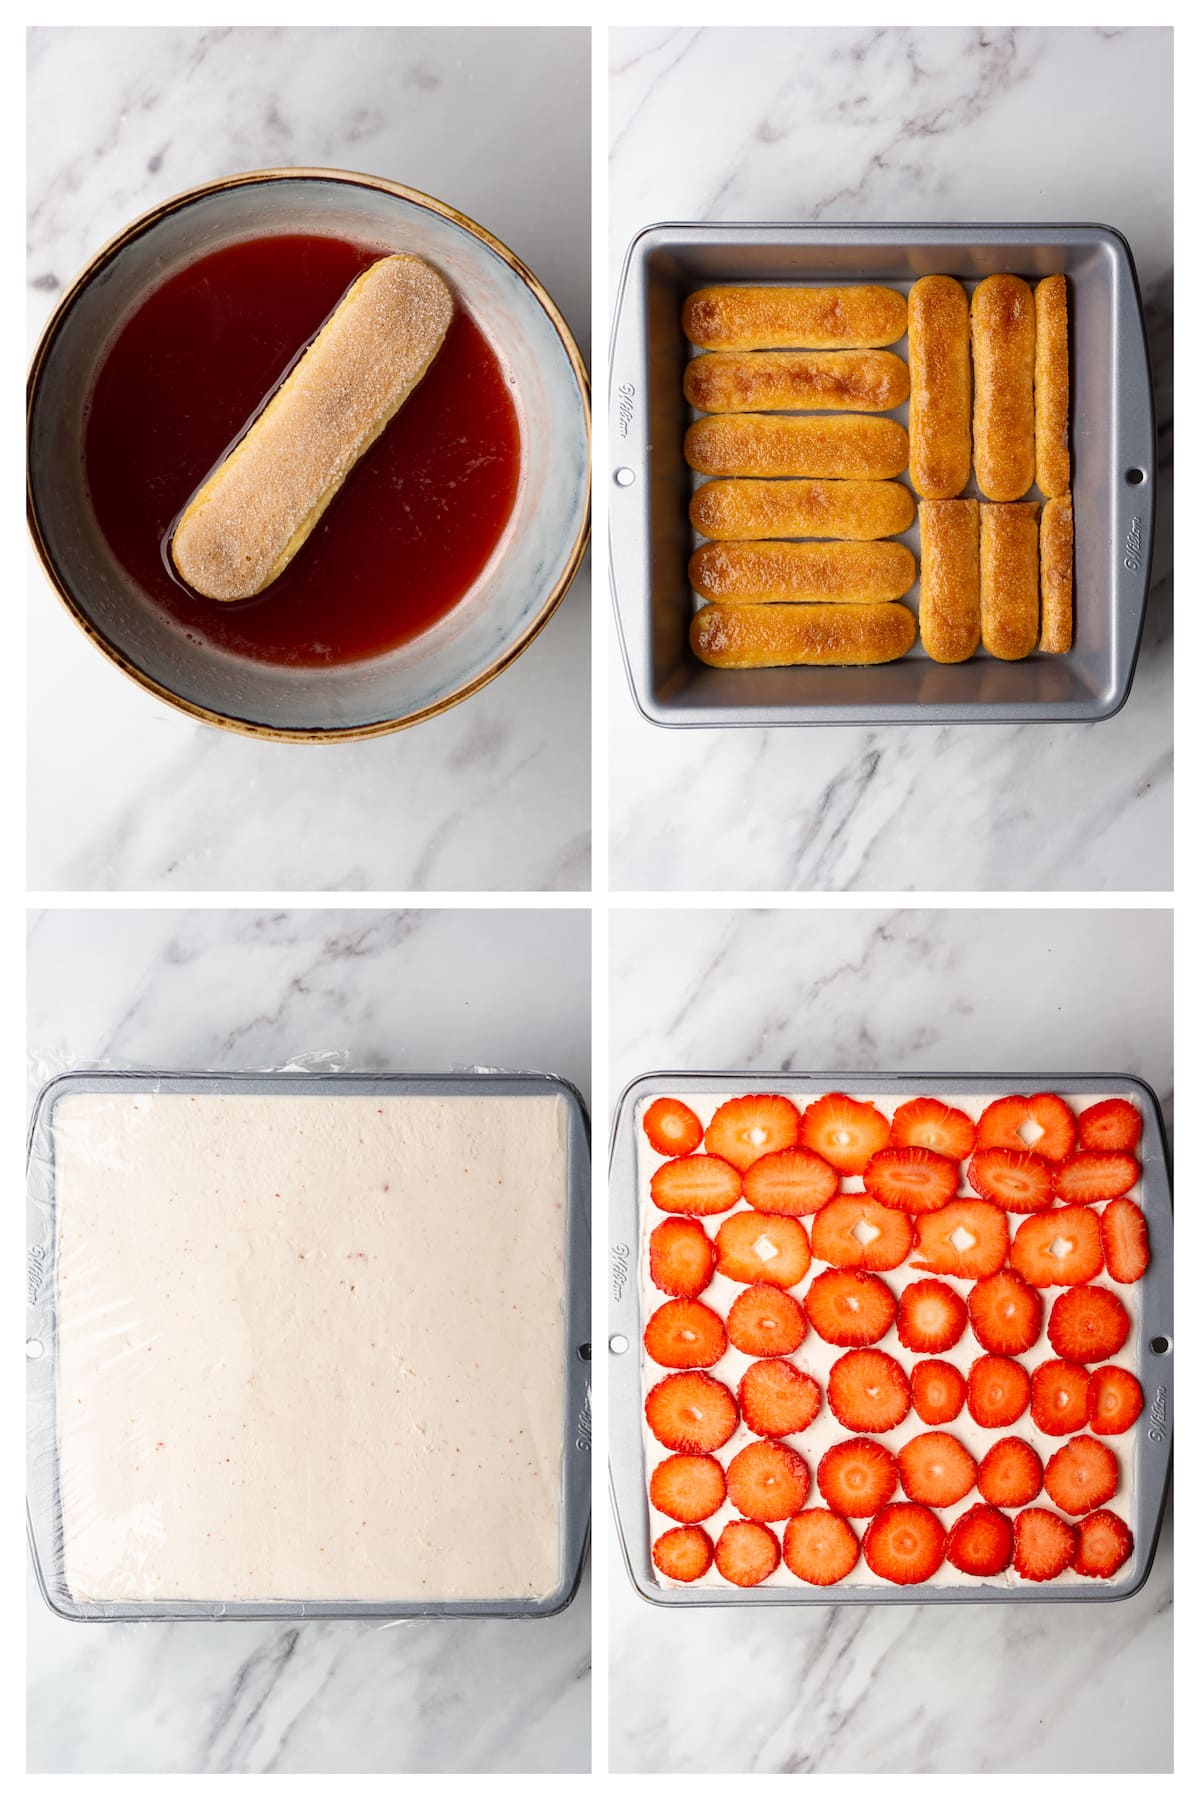 The collage image shows four steps to assemble strawberry tiramisu.